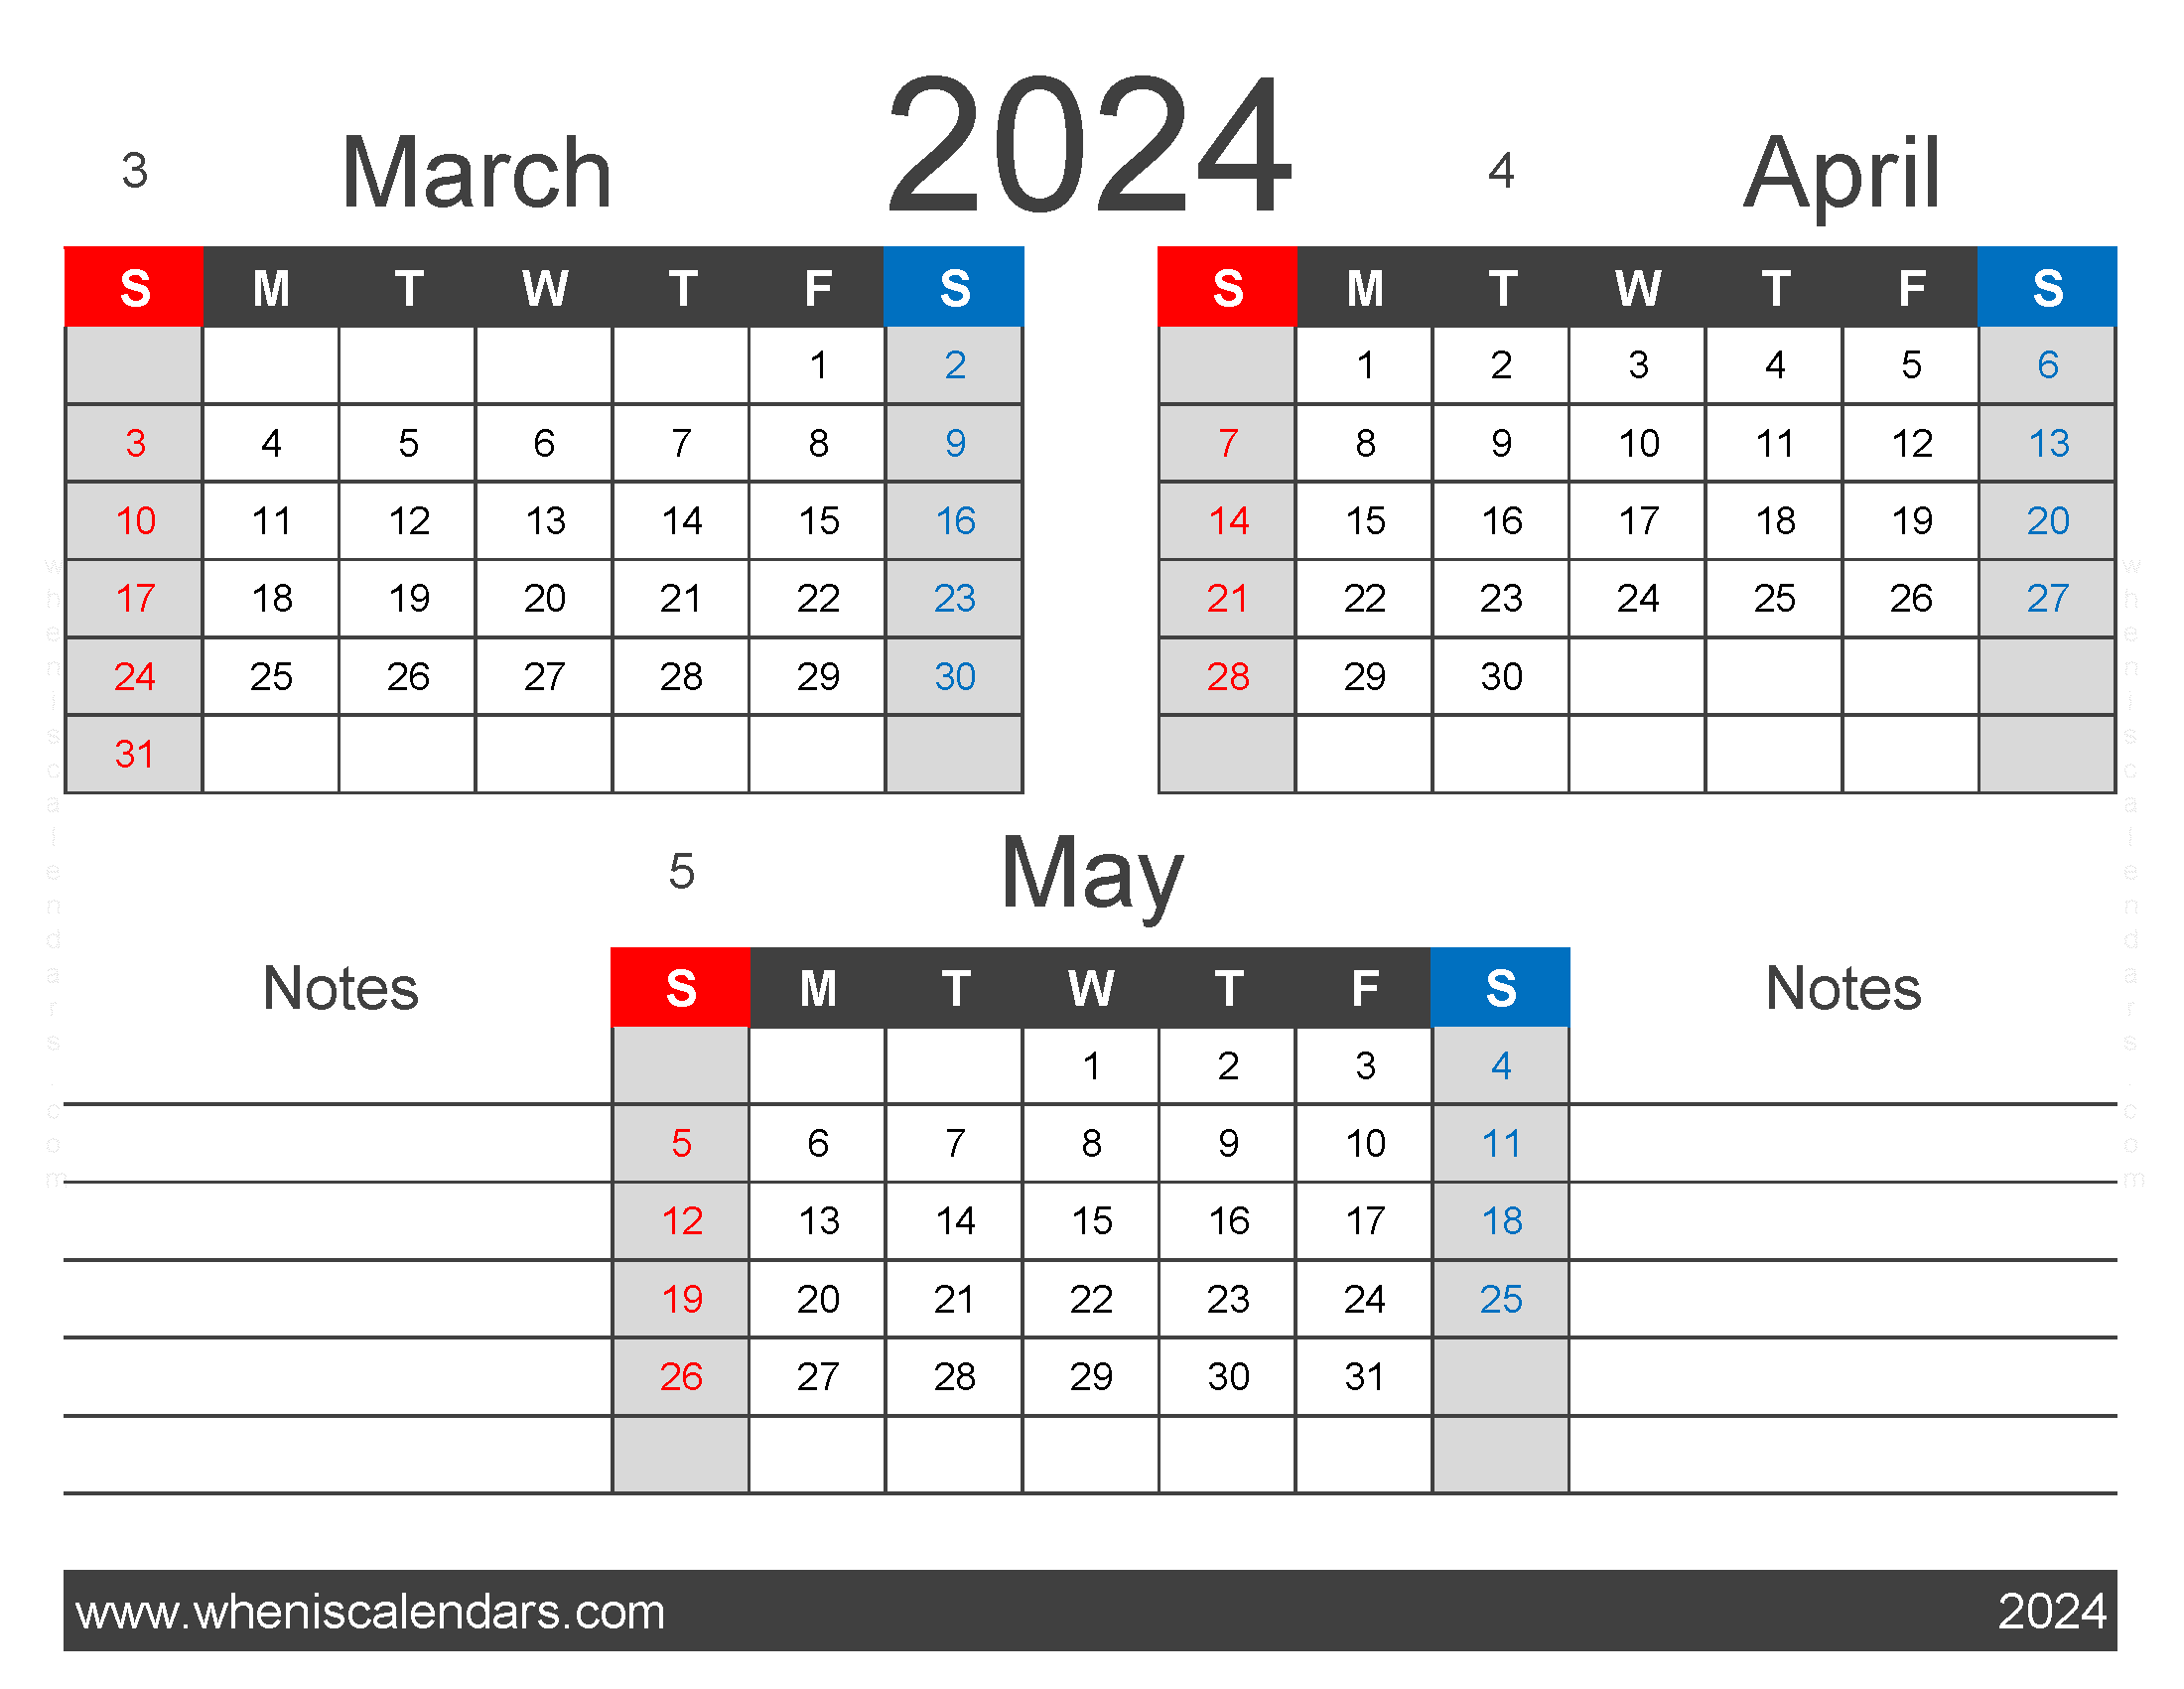 Download Mar Apr May calendar 2024 MAM422